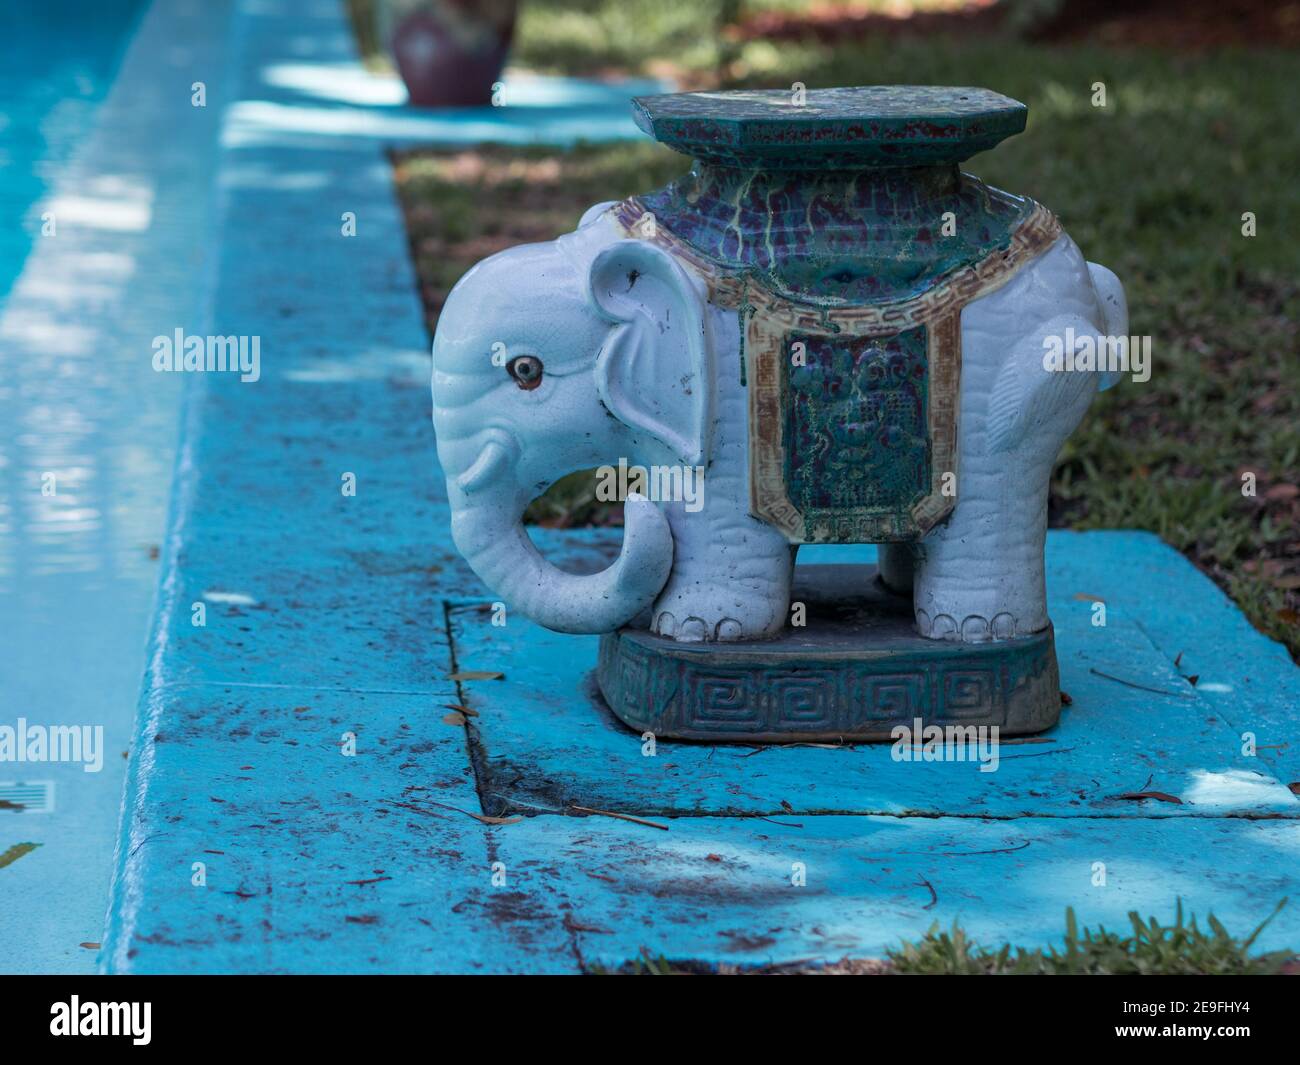 Eine kleine blaue Keramik Elefantenstatue am Pool. Stockfoto